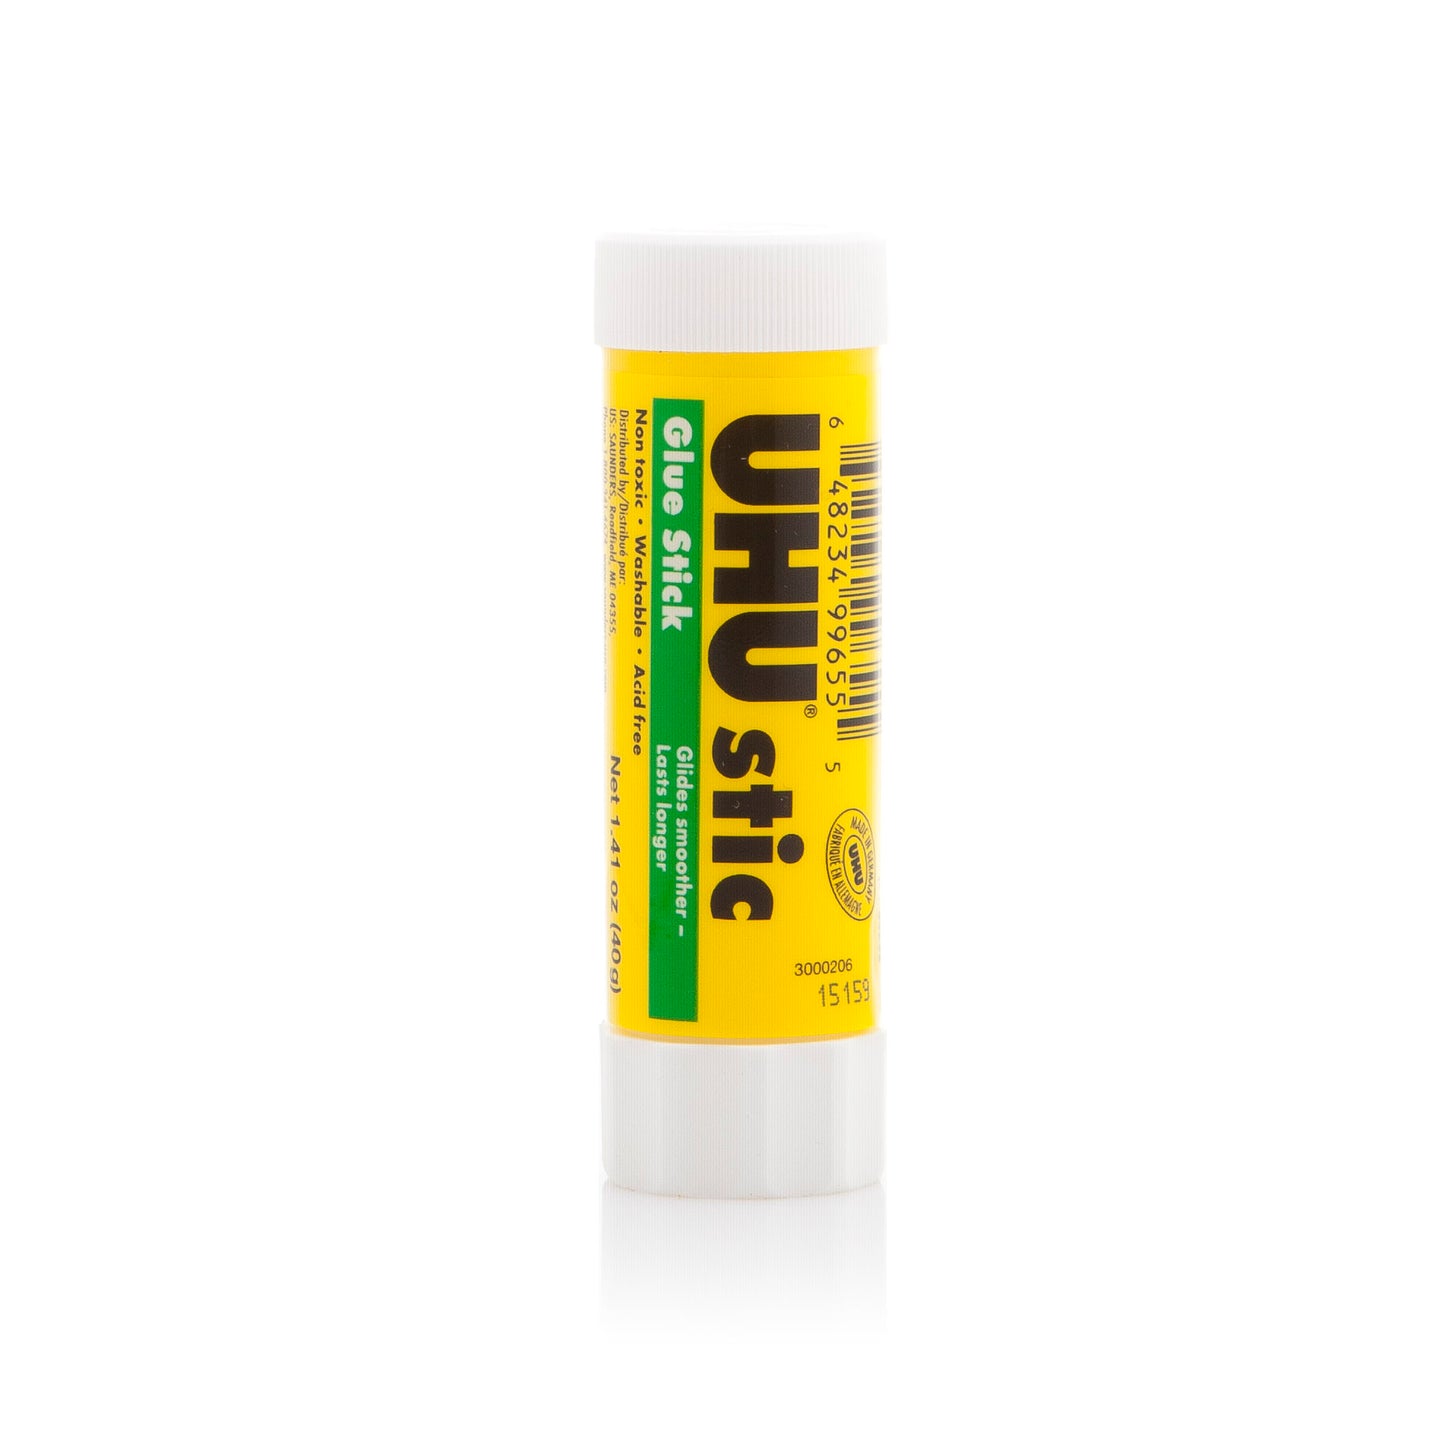 Uhu Glue Stick 1.41 oz